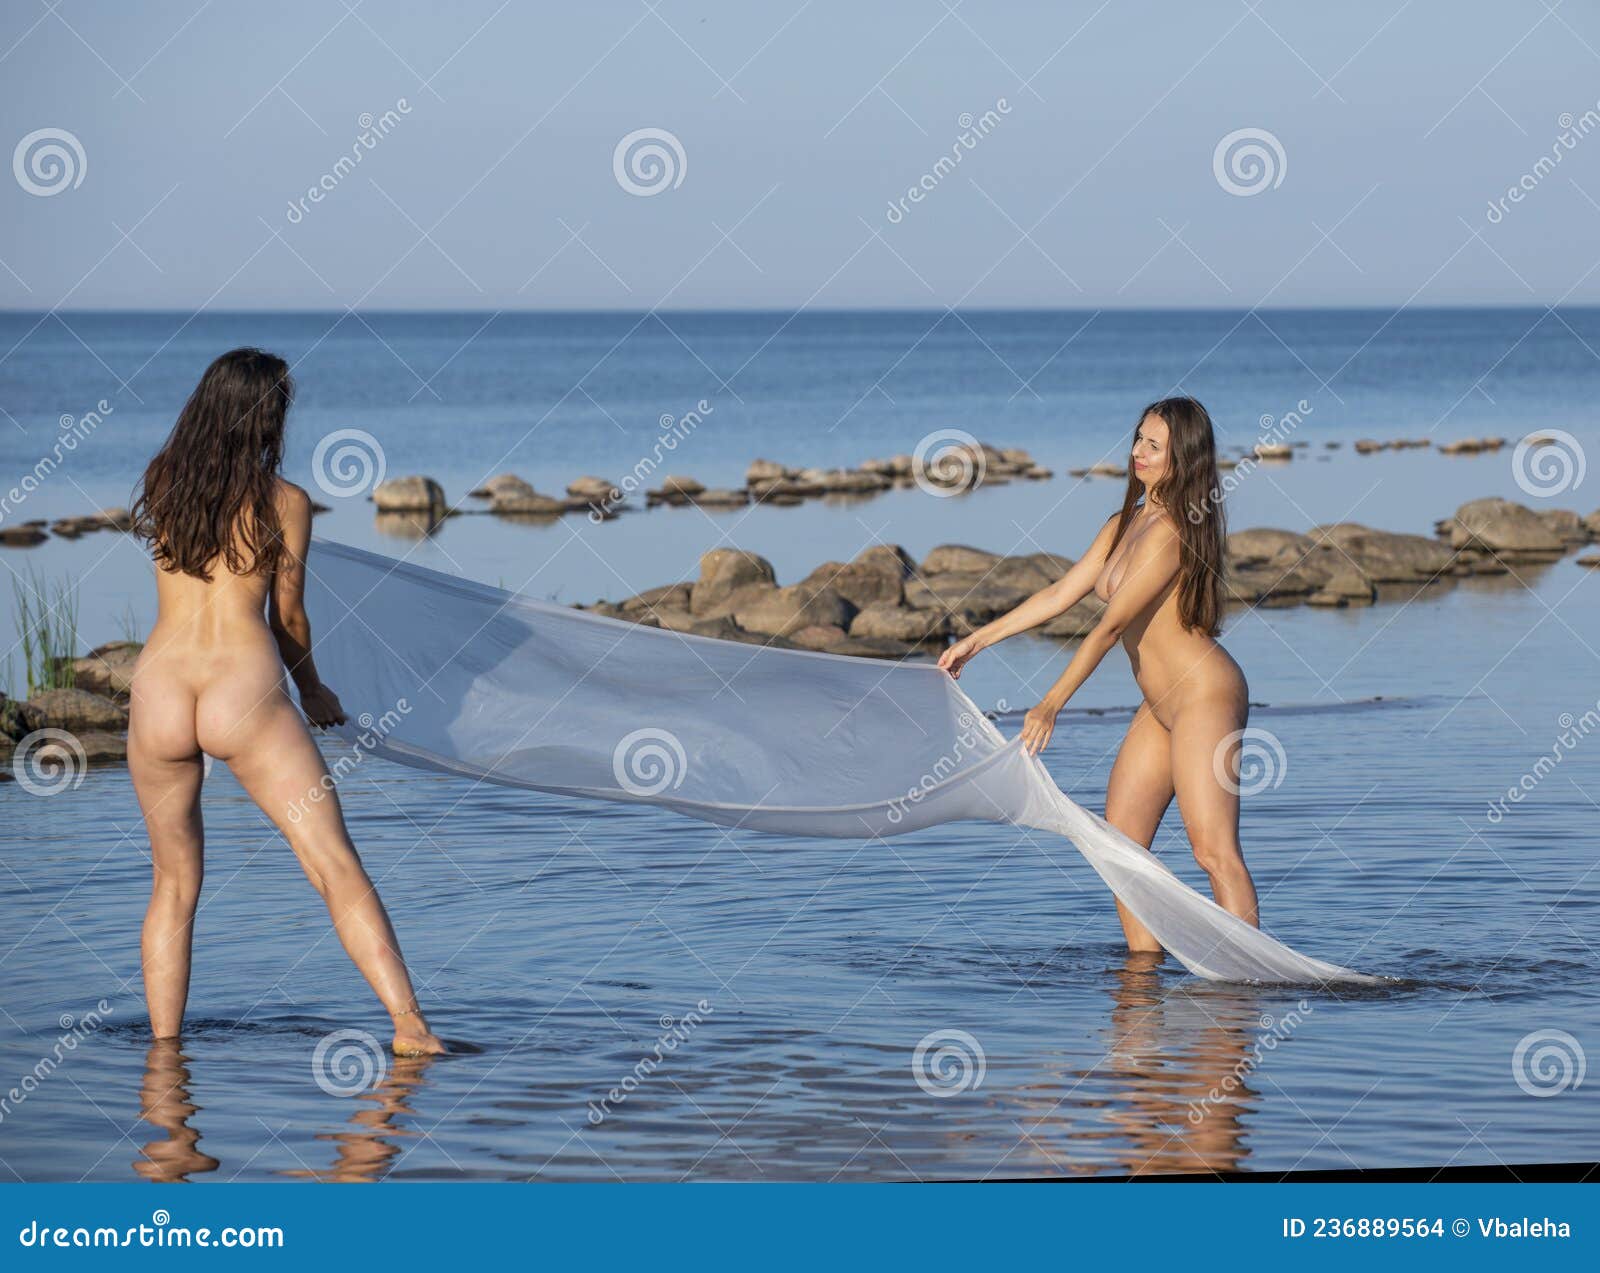 Жены на пляже (66 фото) - секс фото